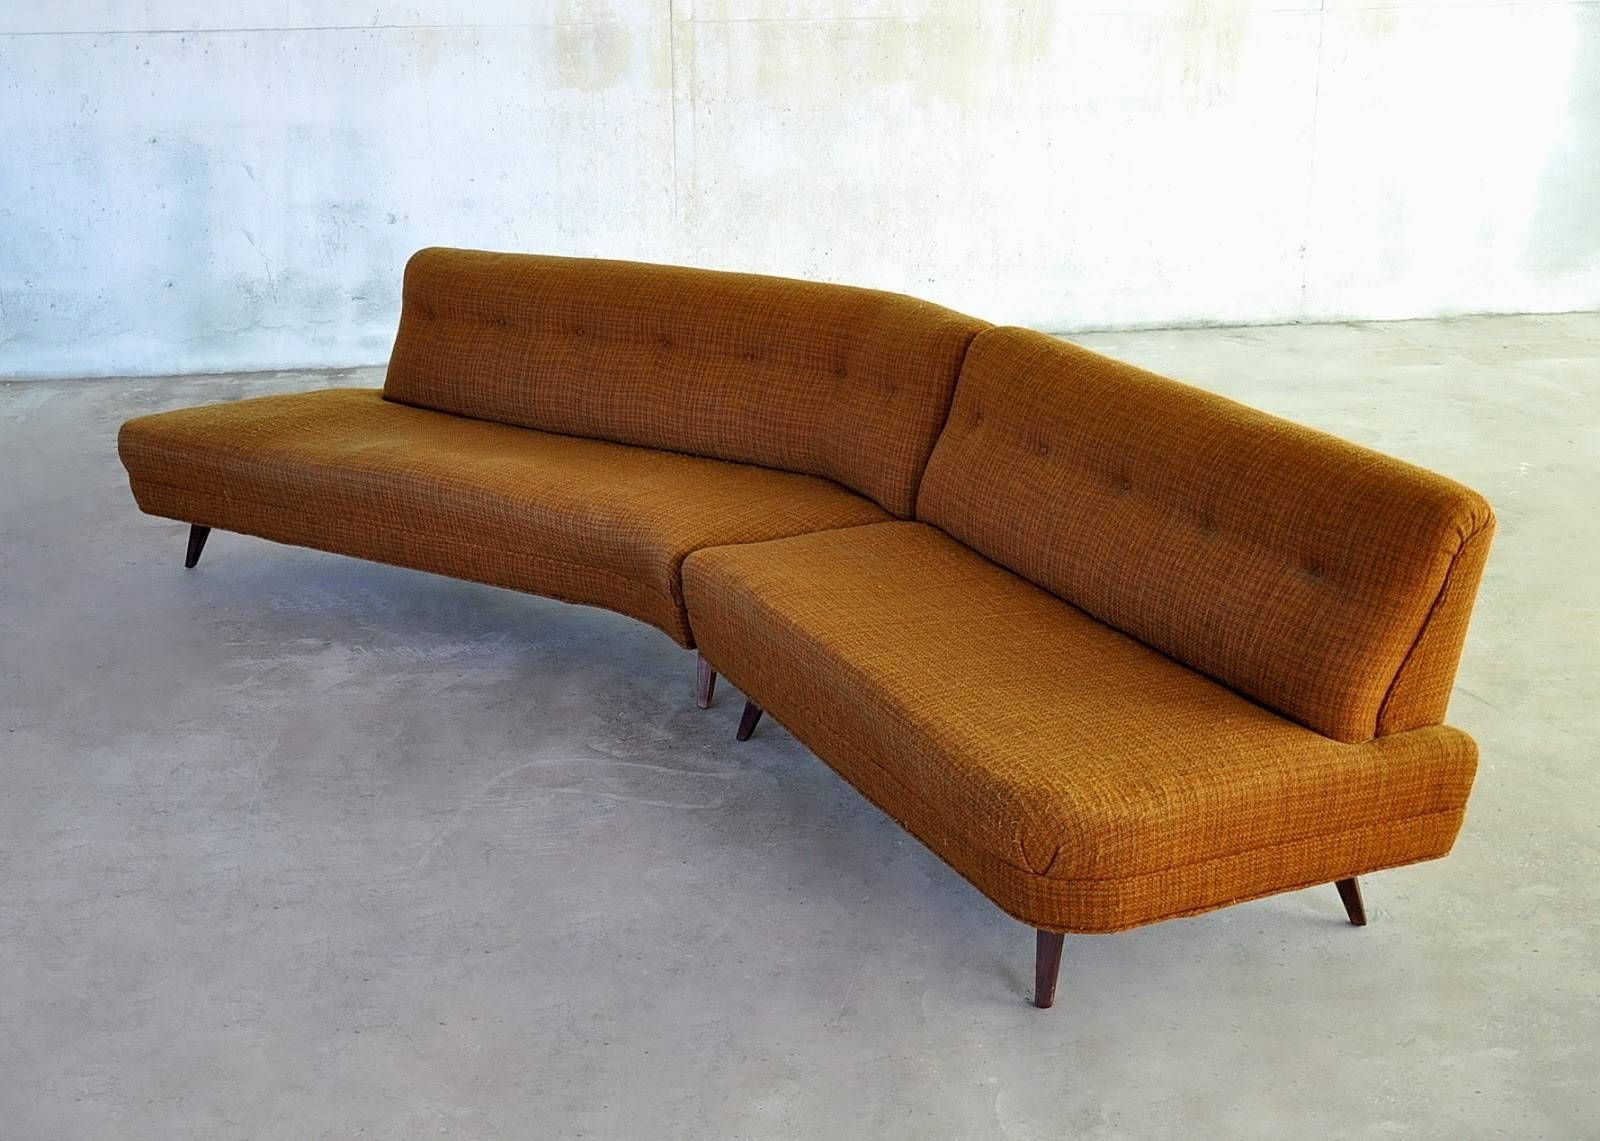 Modern Sectional Sofa Toronto. Stylish Modern Furniture Toronto Inside Gold Sectional Sofa (Photo 18 of 25)